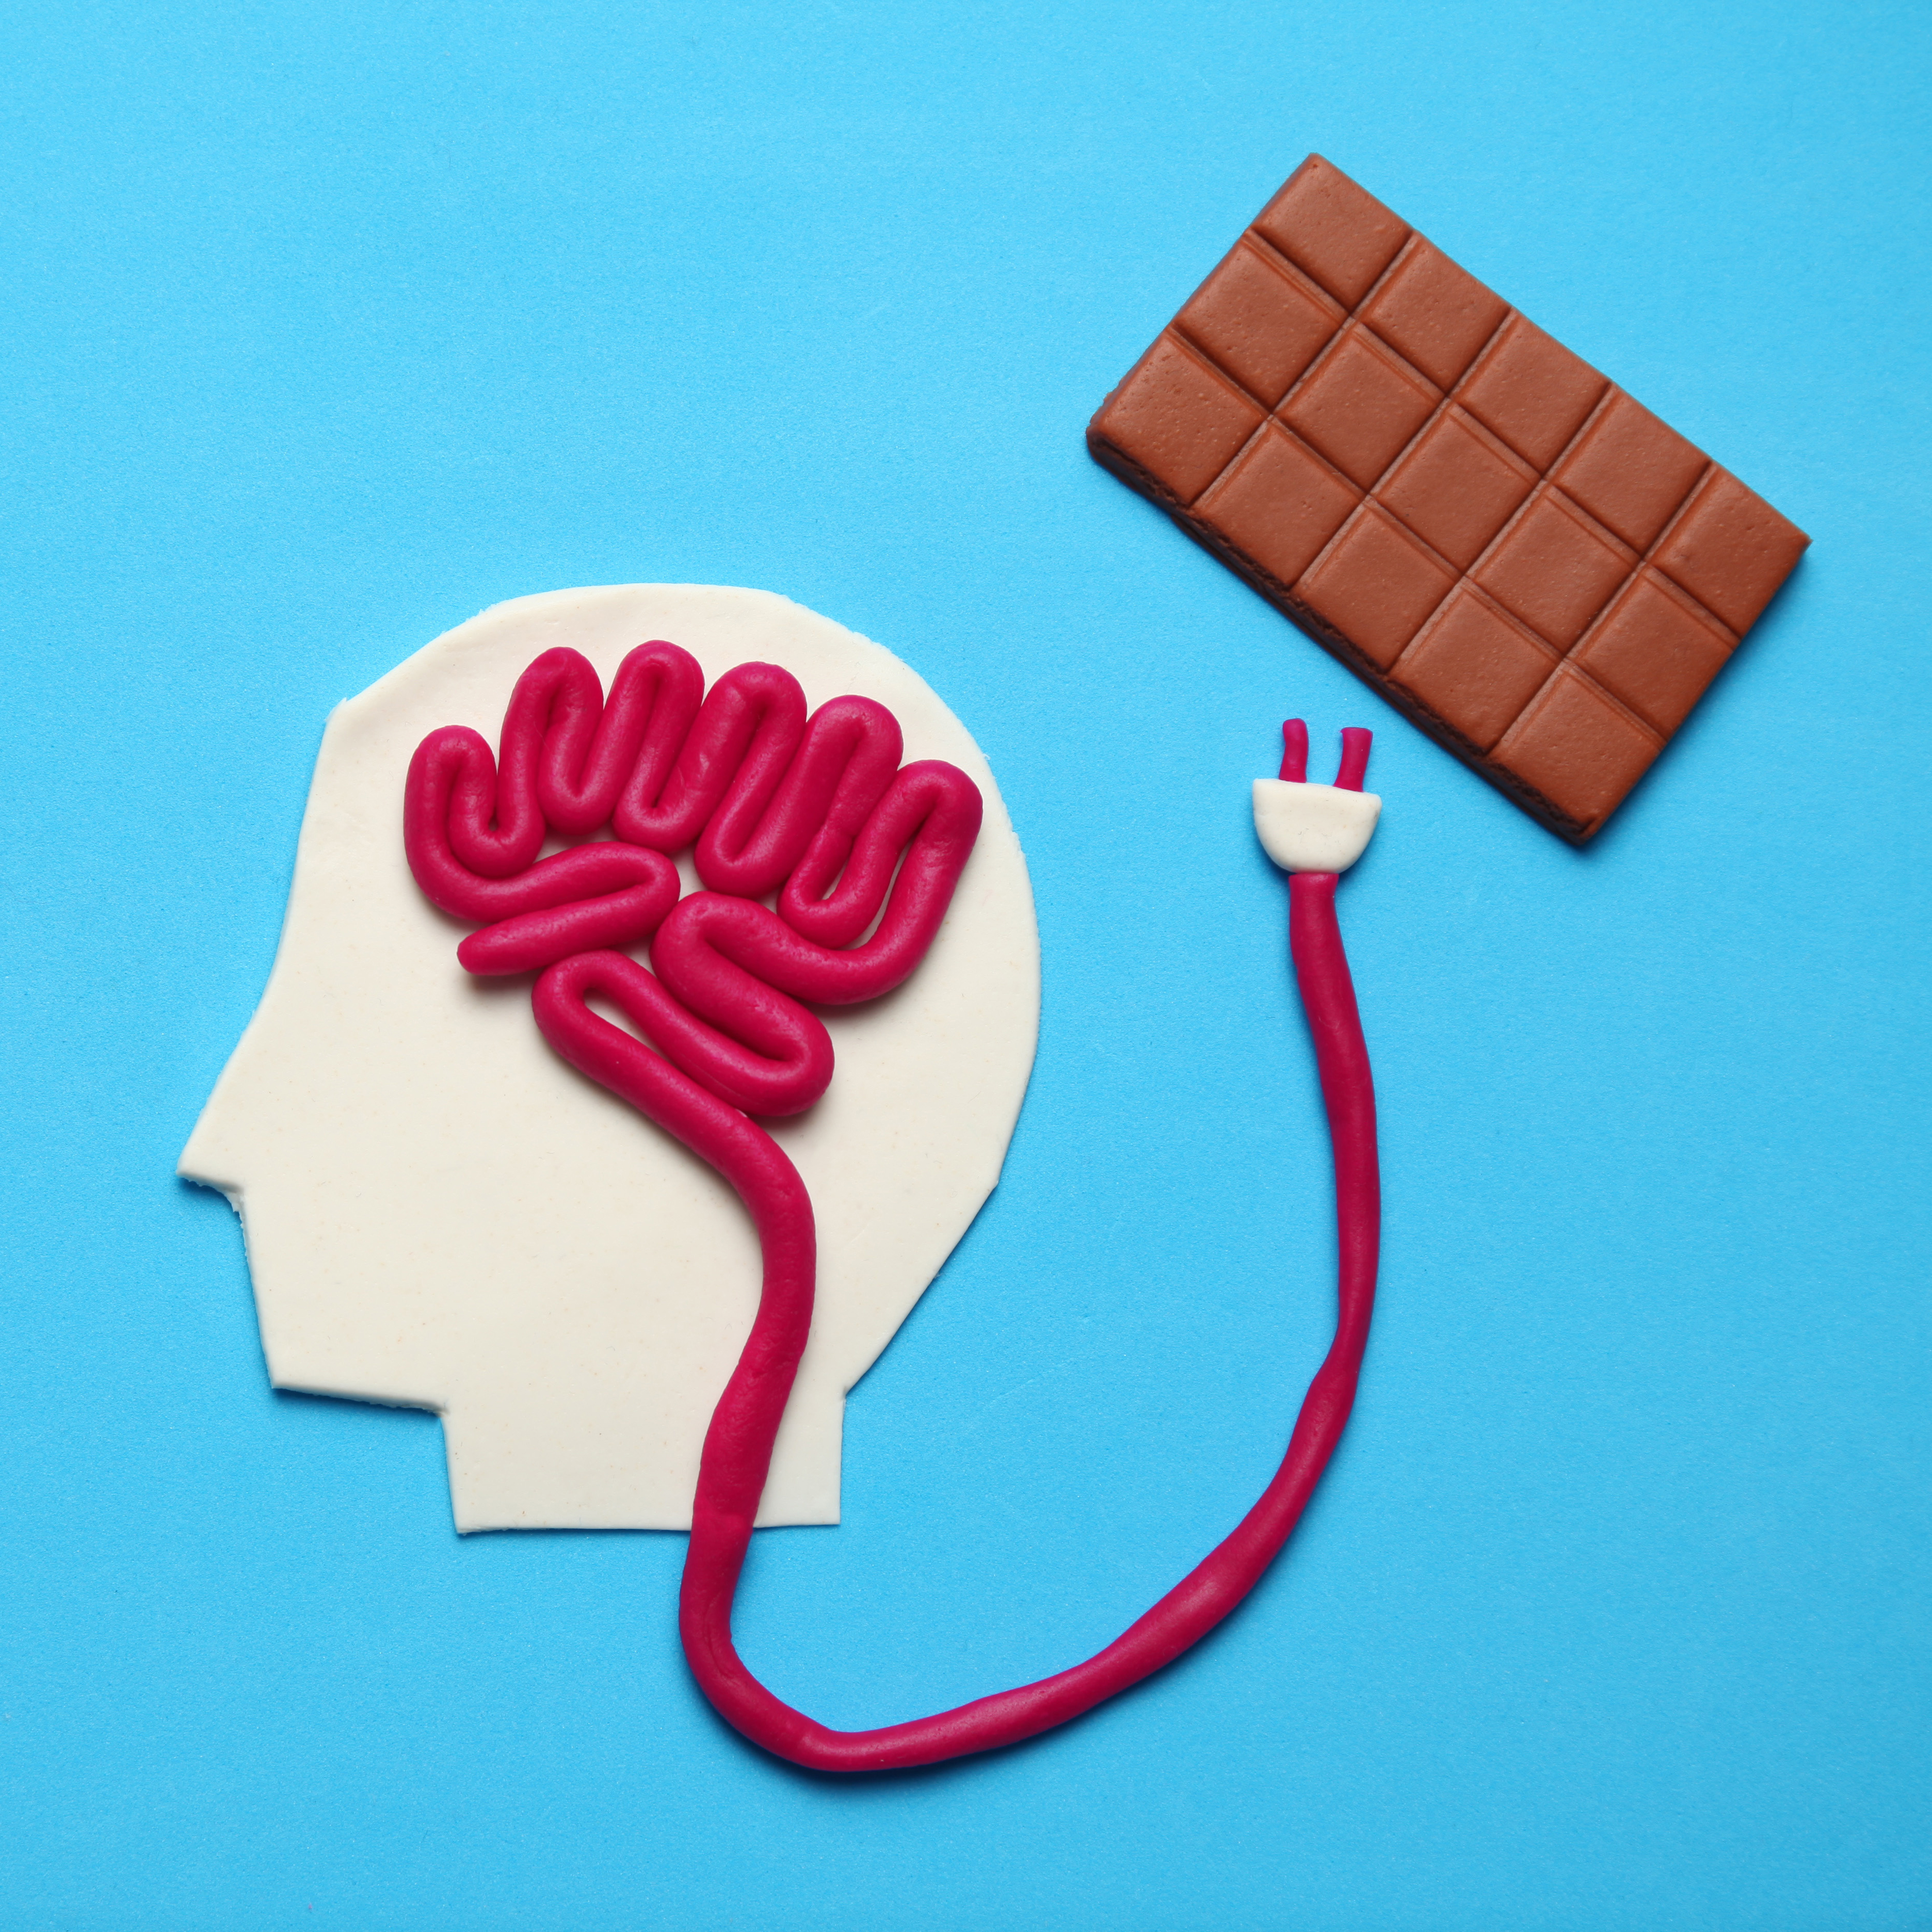 Chocolate and the brain